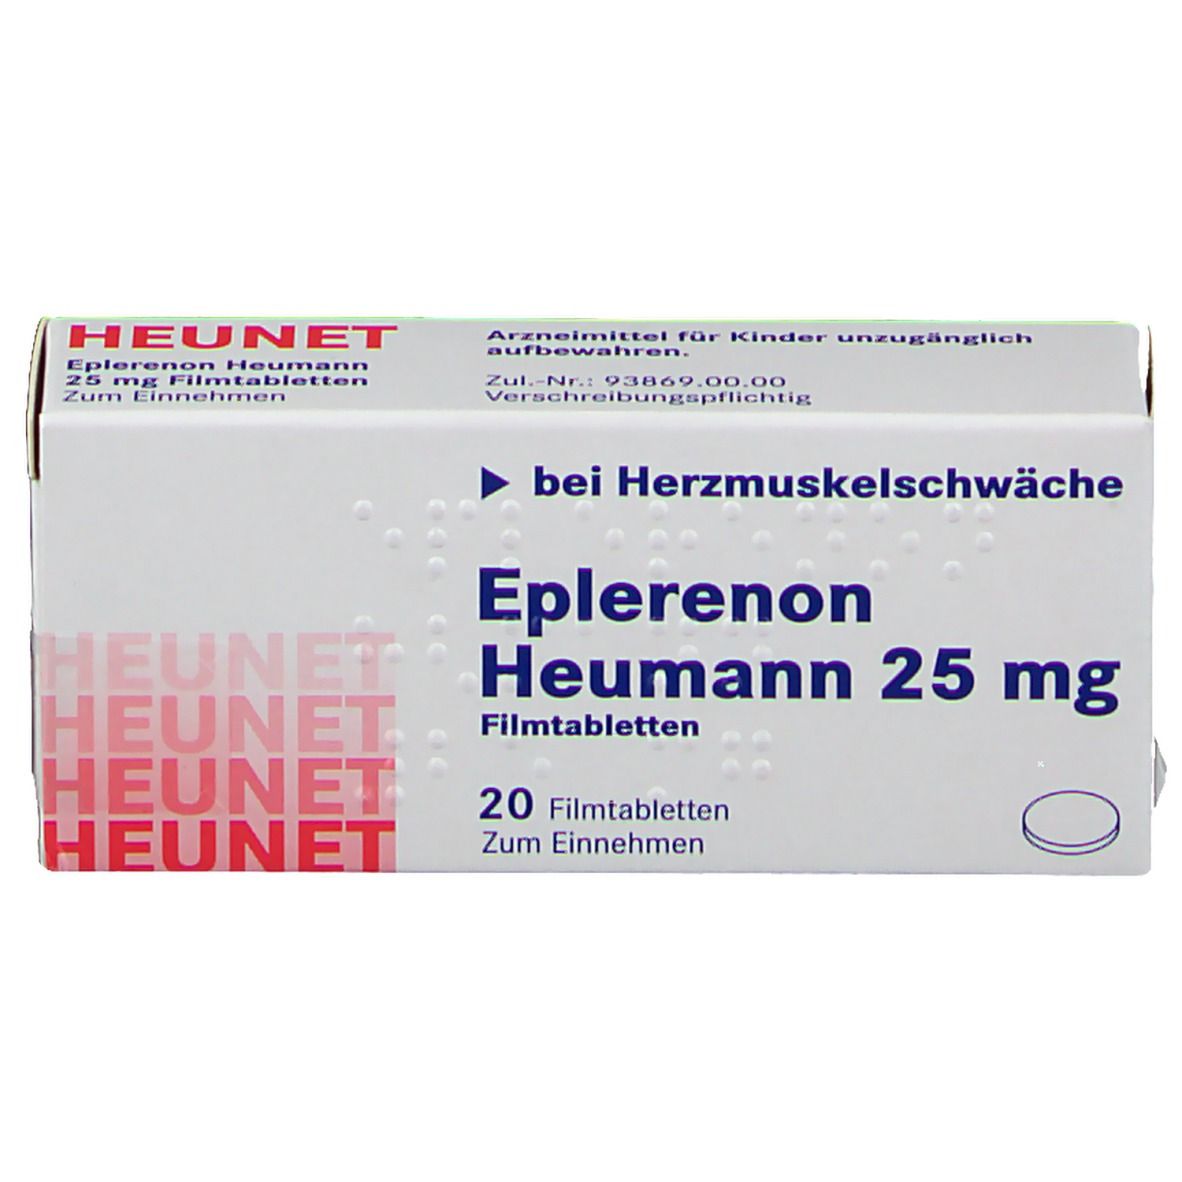 Eplerenon Heumann 25 mg